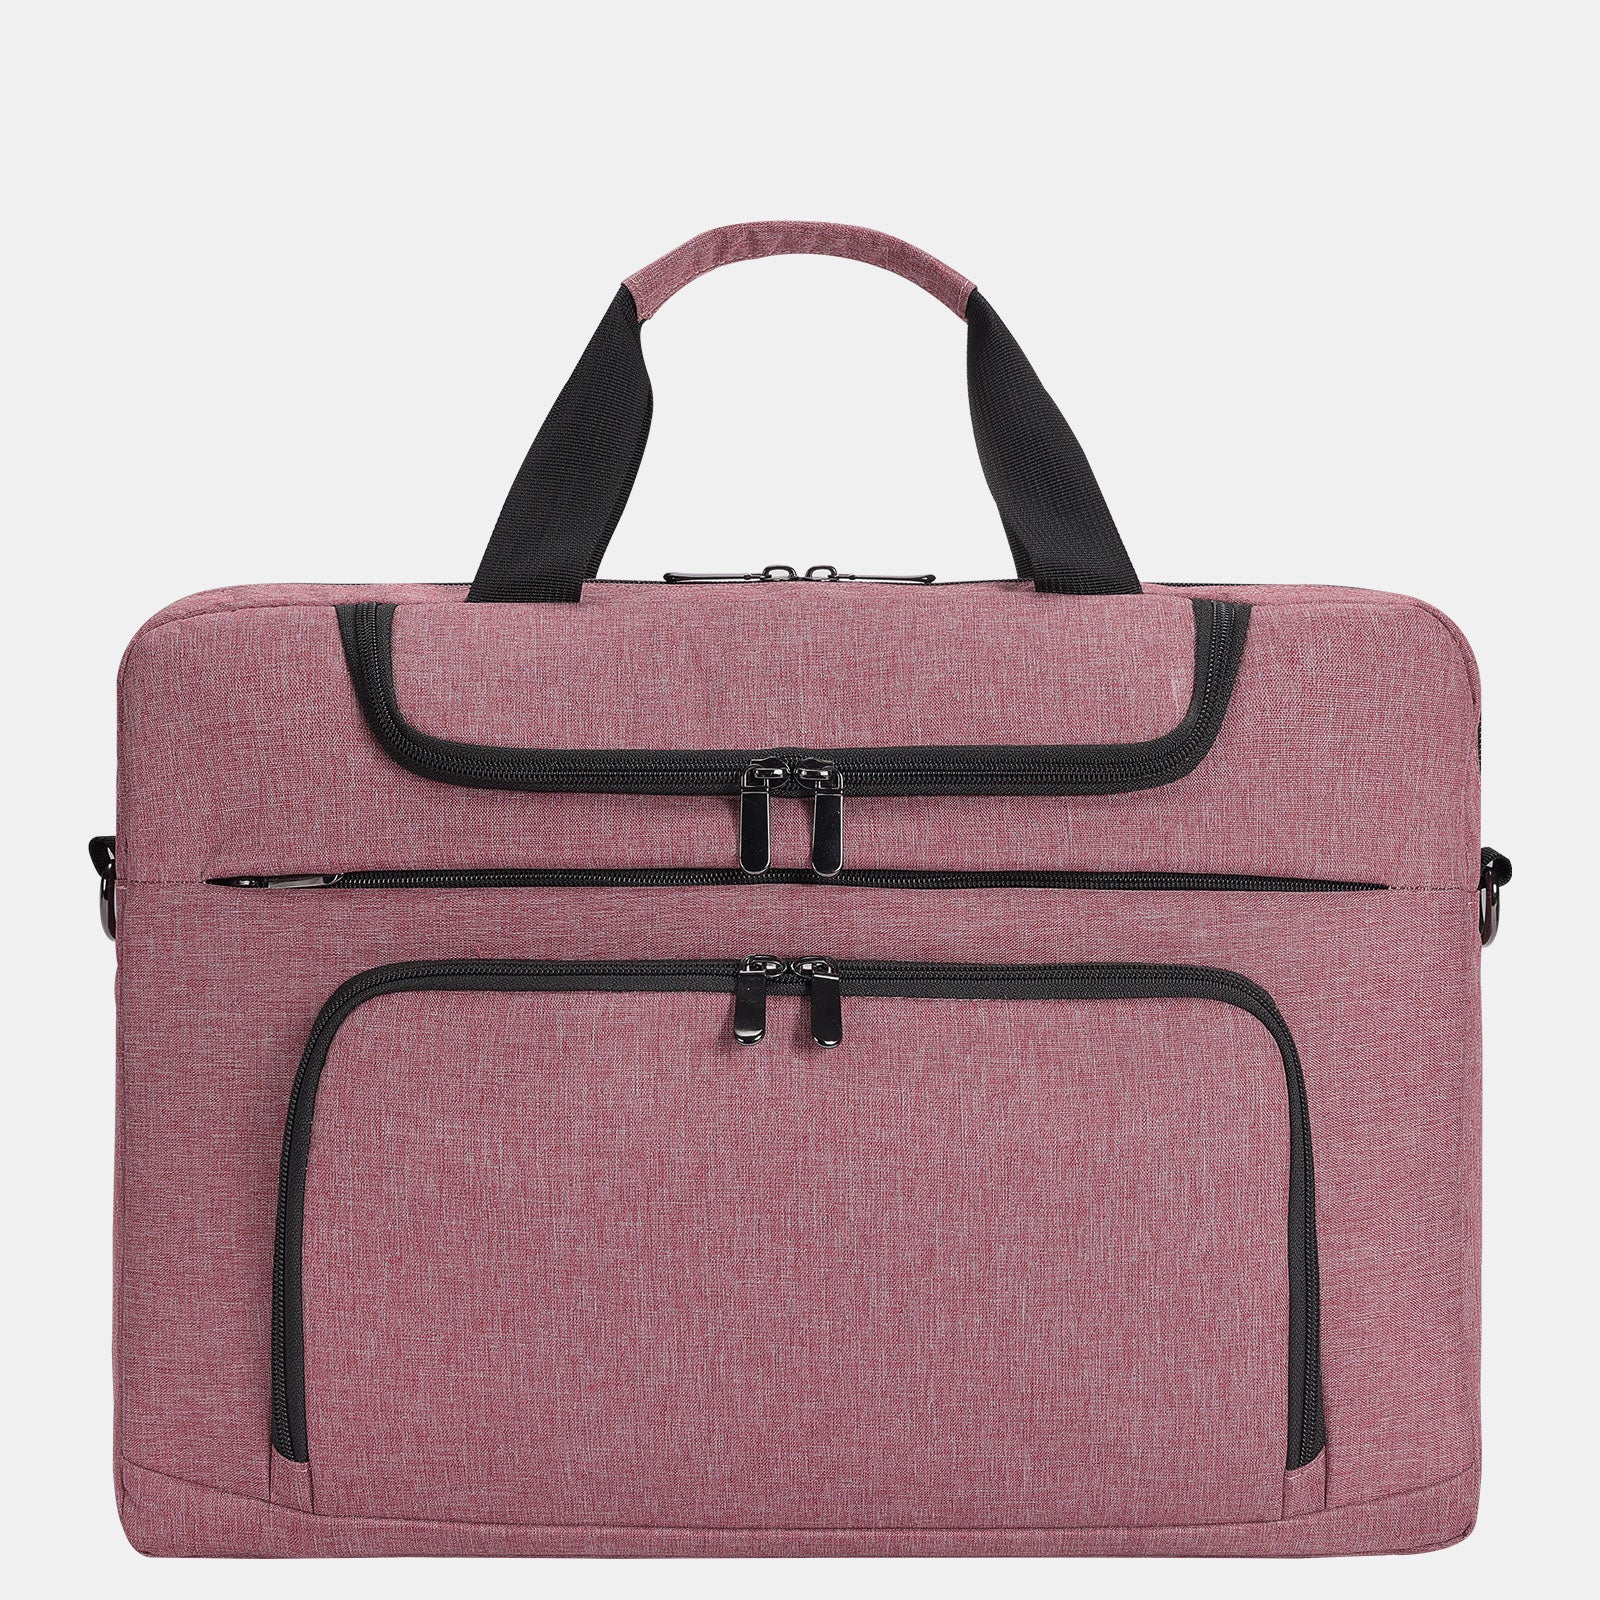 Bertasche Pink Canvas Briefcase Laptop Bag